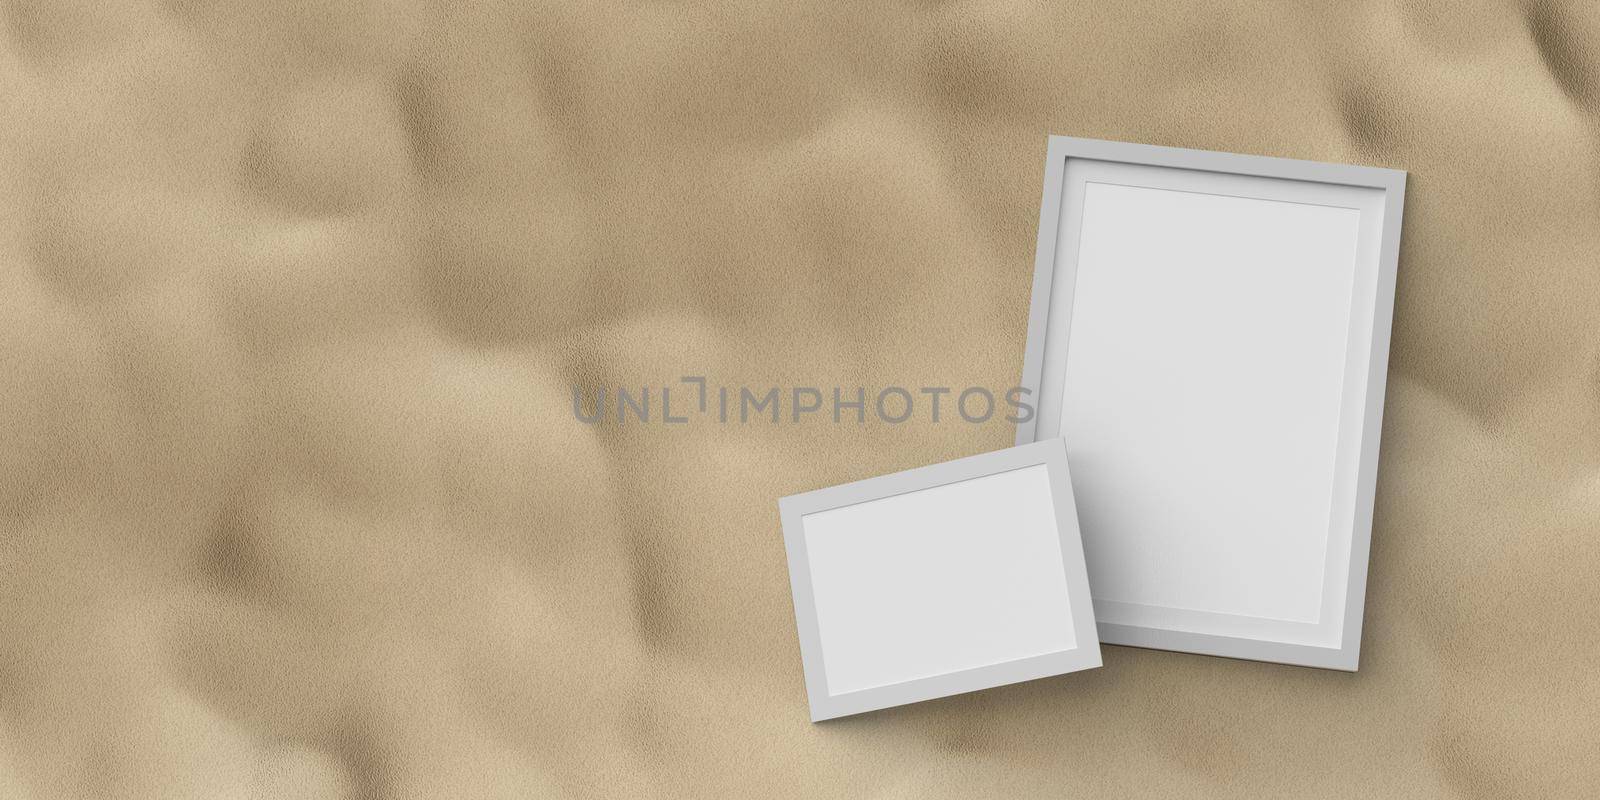 Realistic of photo frame mockup on sand ground, 3d illustration